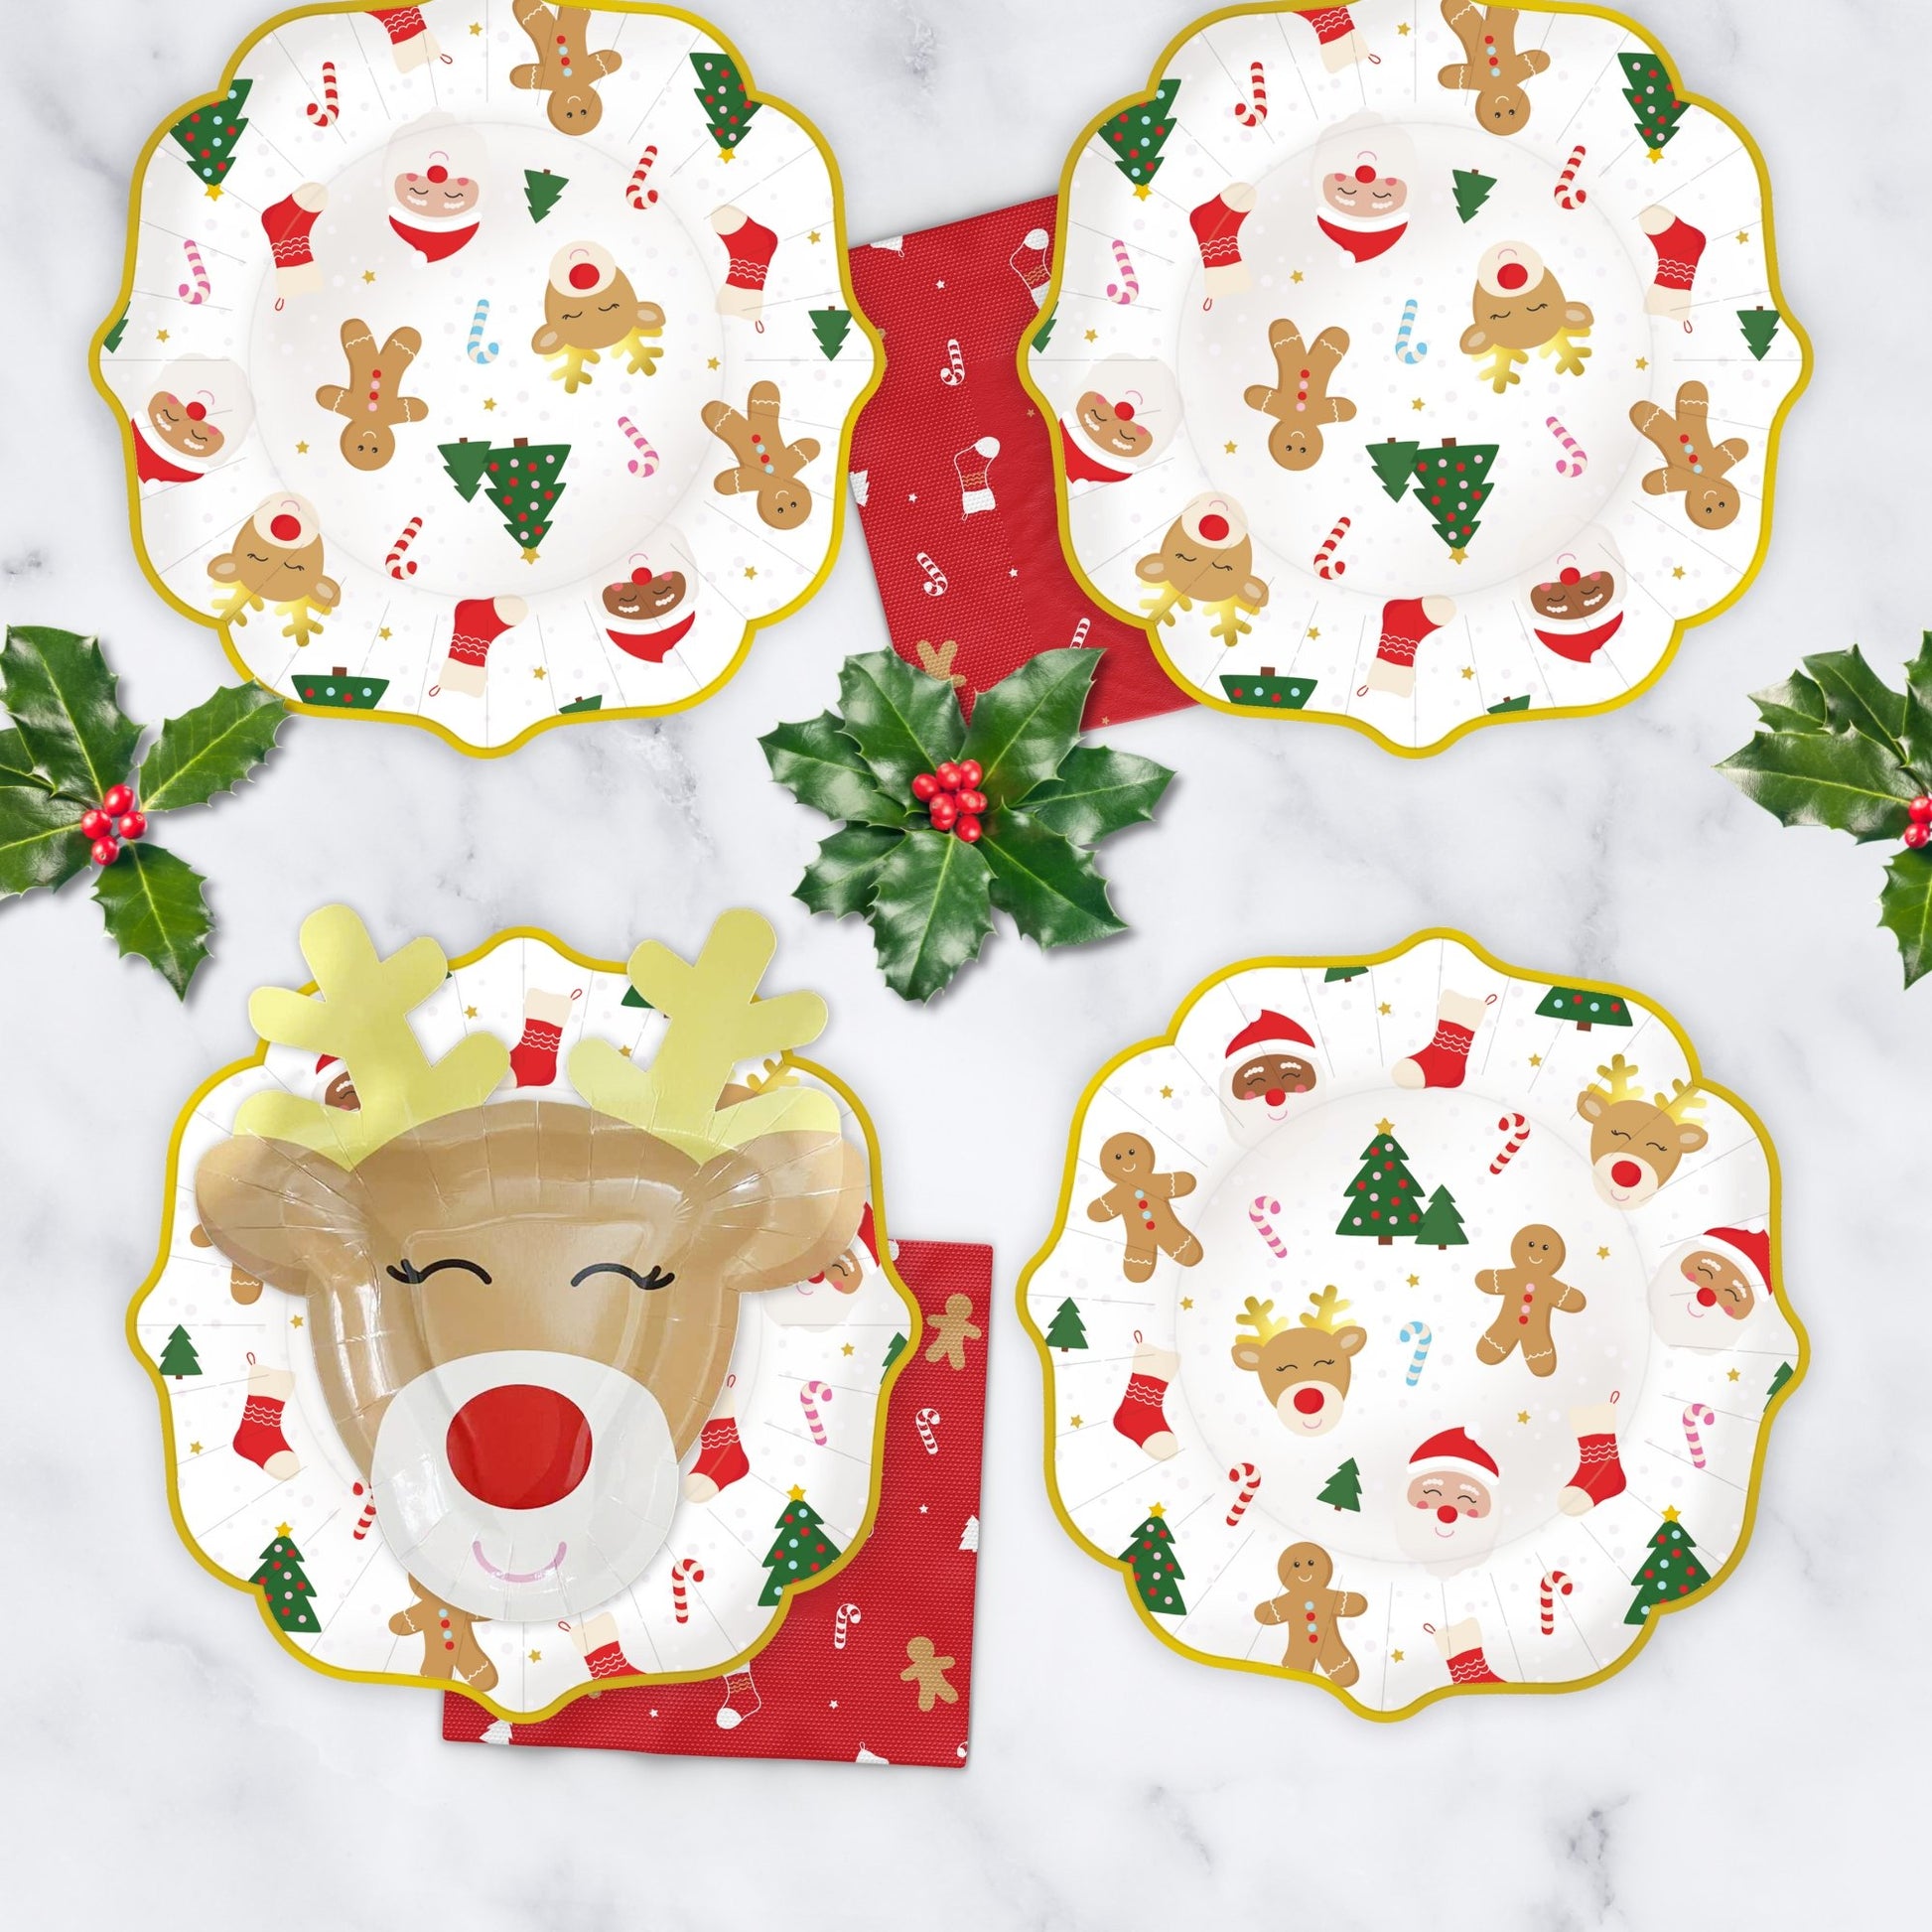 Paper Plate Christmas Characters: Santa, Rudolph, Snowman · Kix Cereal